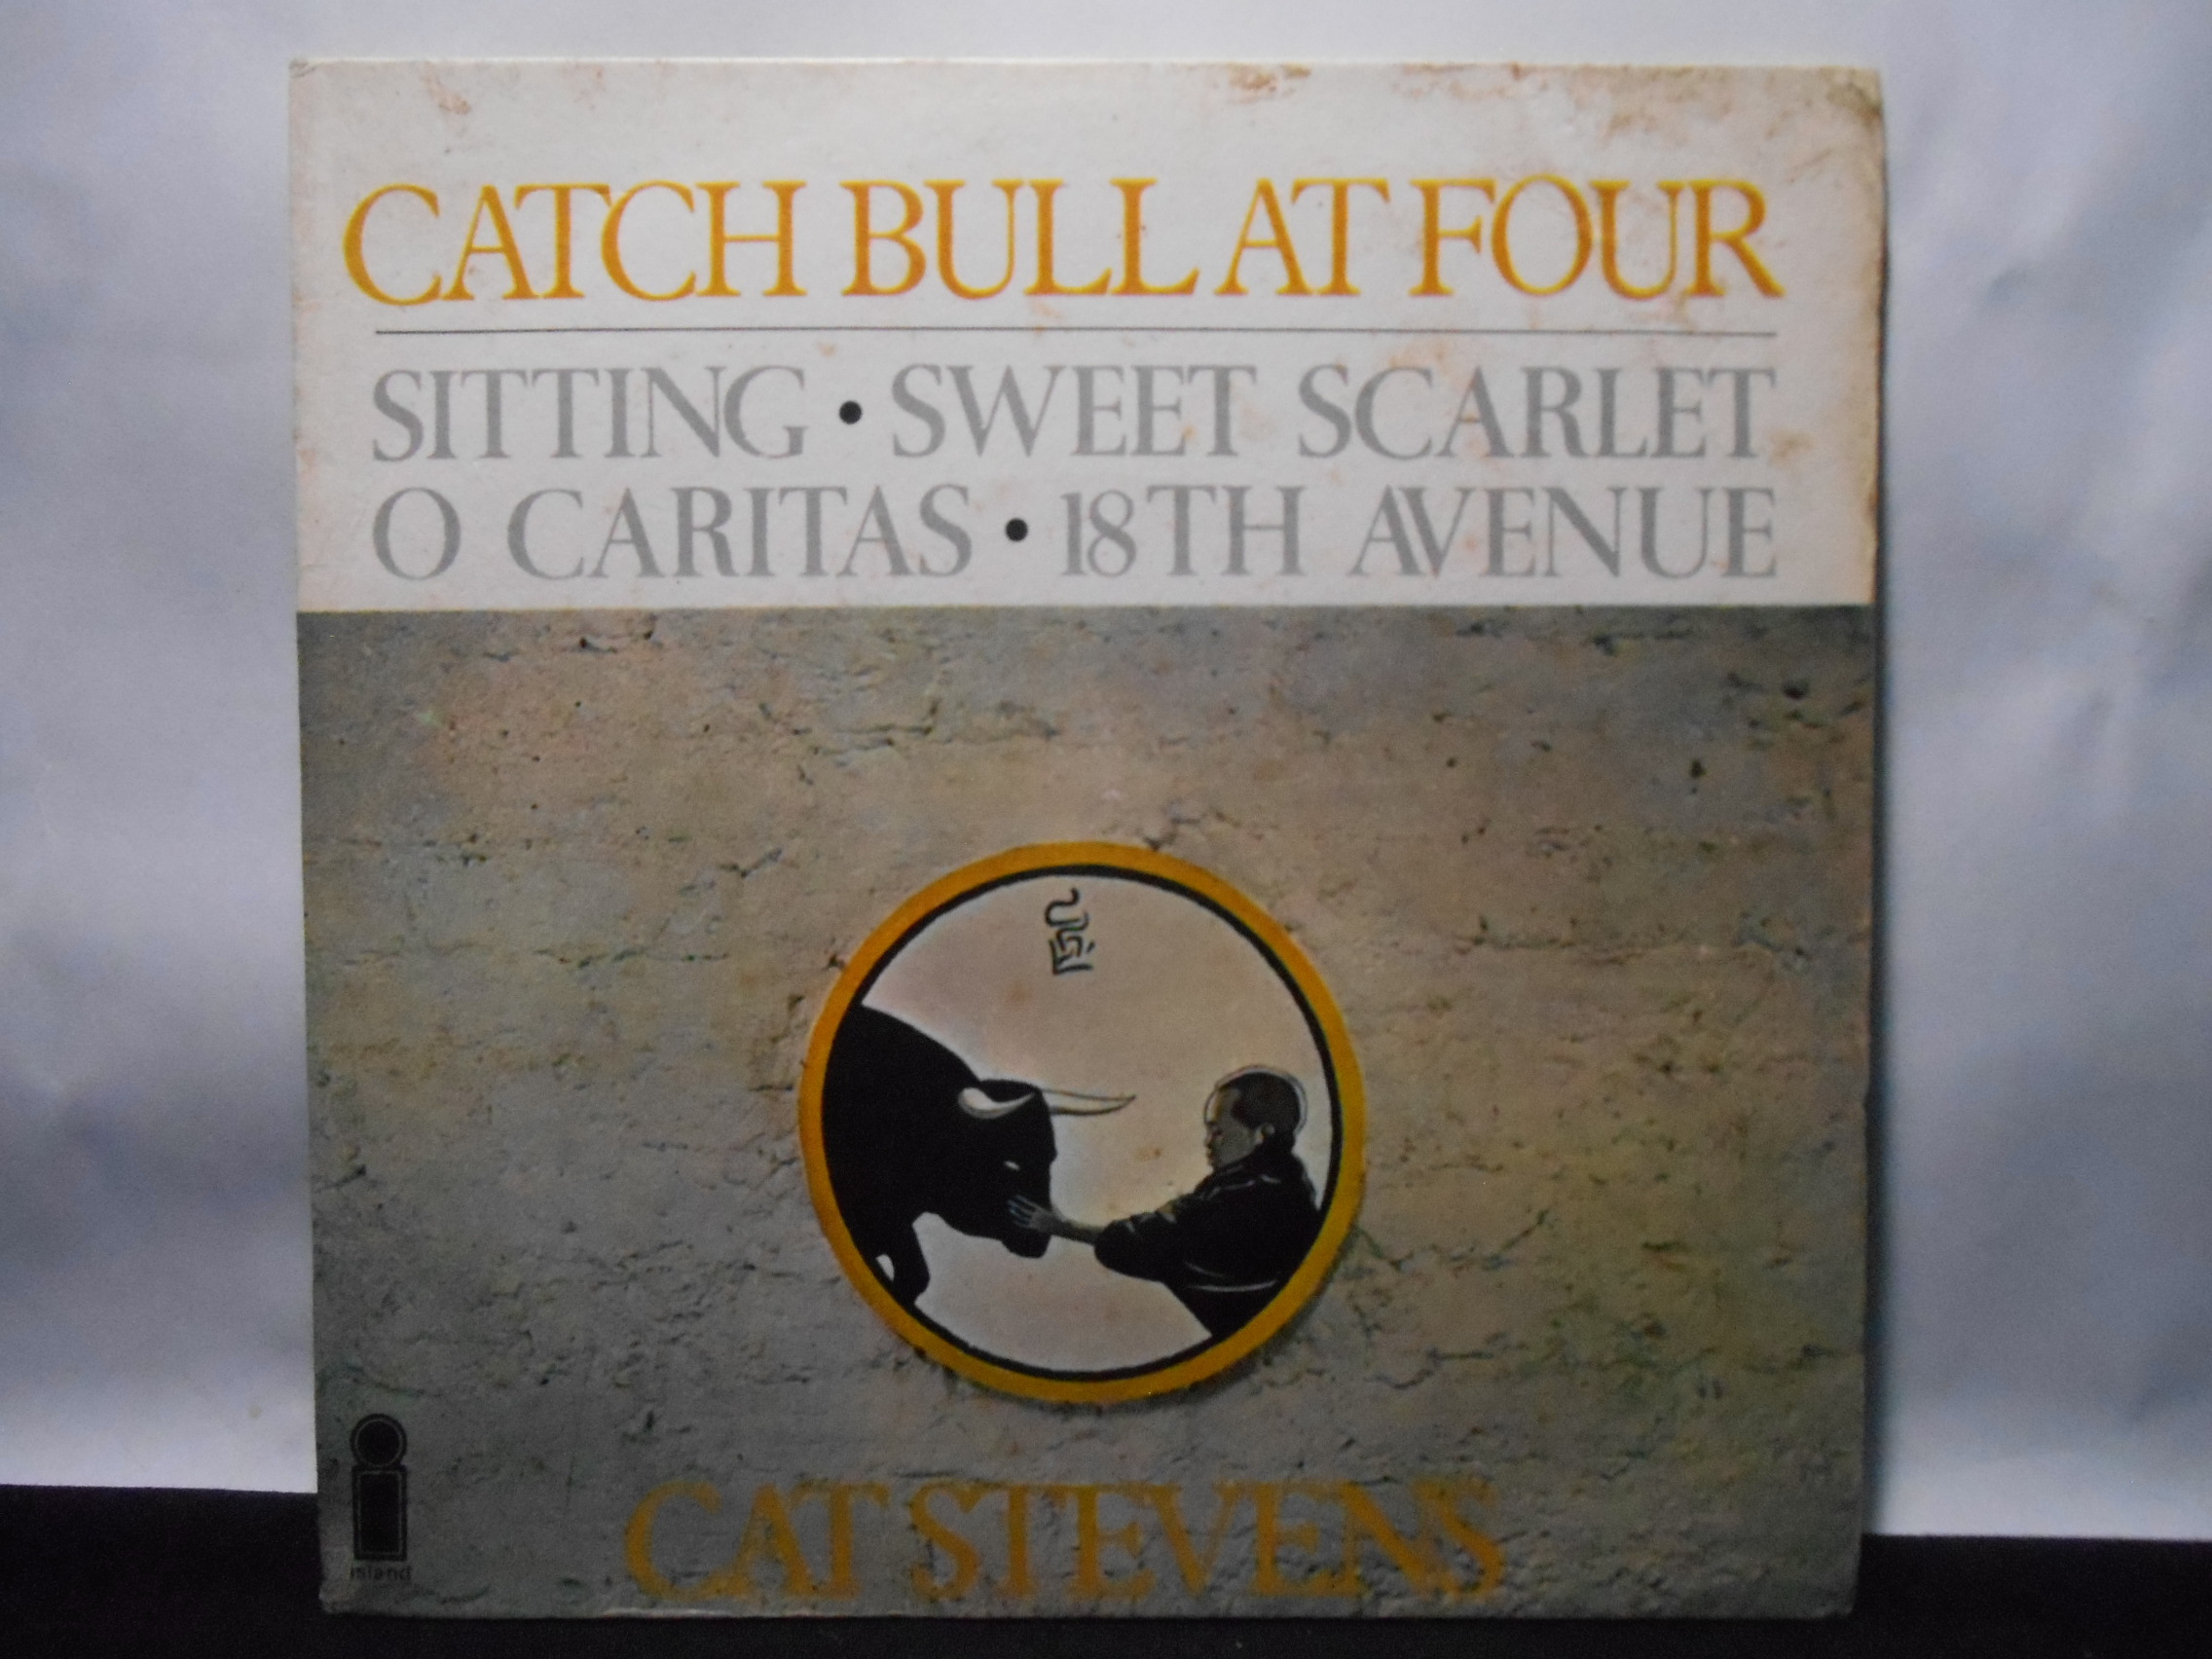 Vinil Compacto - Cat Stevens - Catch Bull at Four